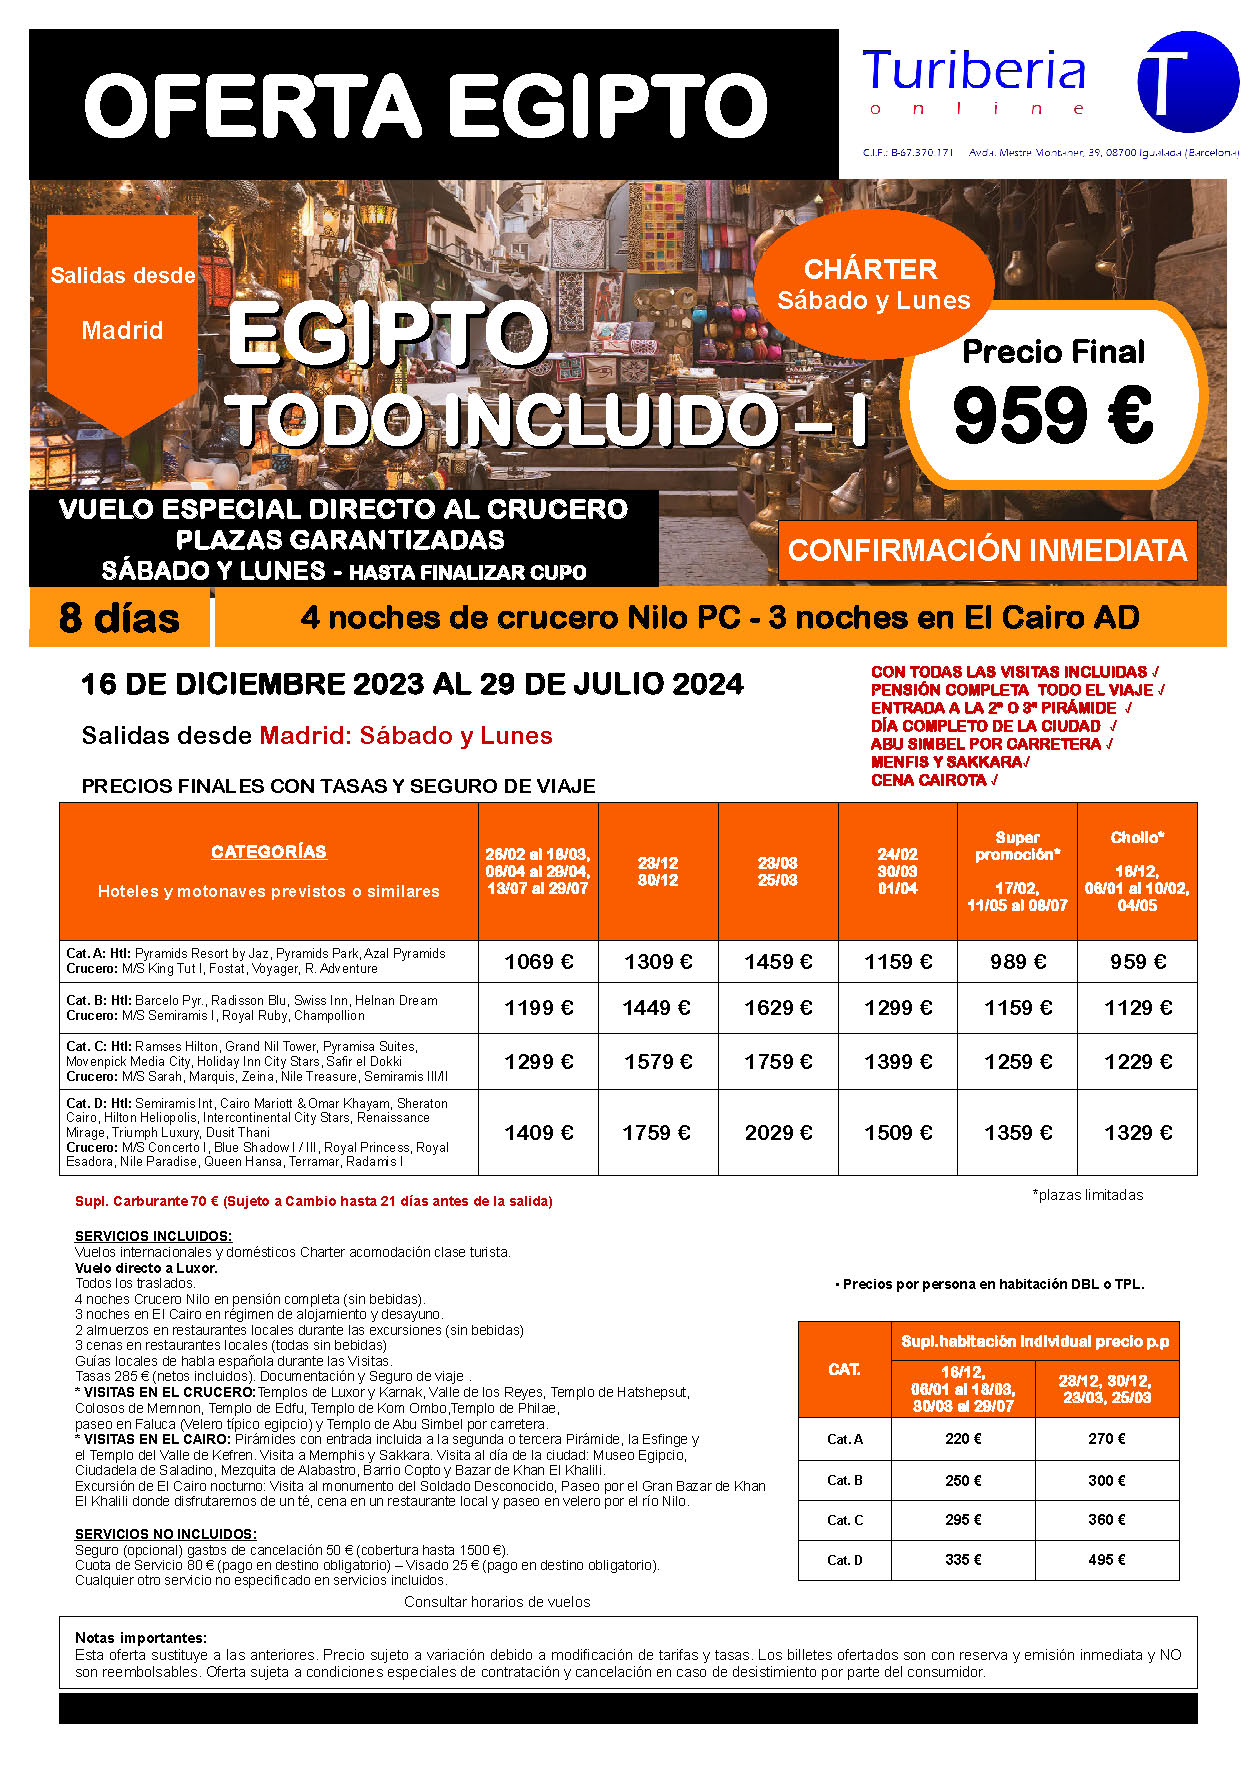 Oferta Turiberia circuito Egipto Charter Todo Incluido 8 dias salidas Enero a Julio 2024 en vuelo directo a Luxor desde Madrid